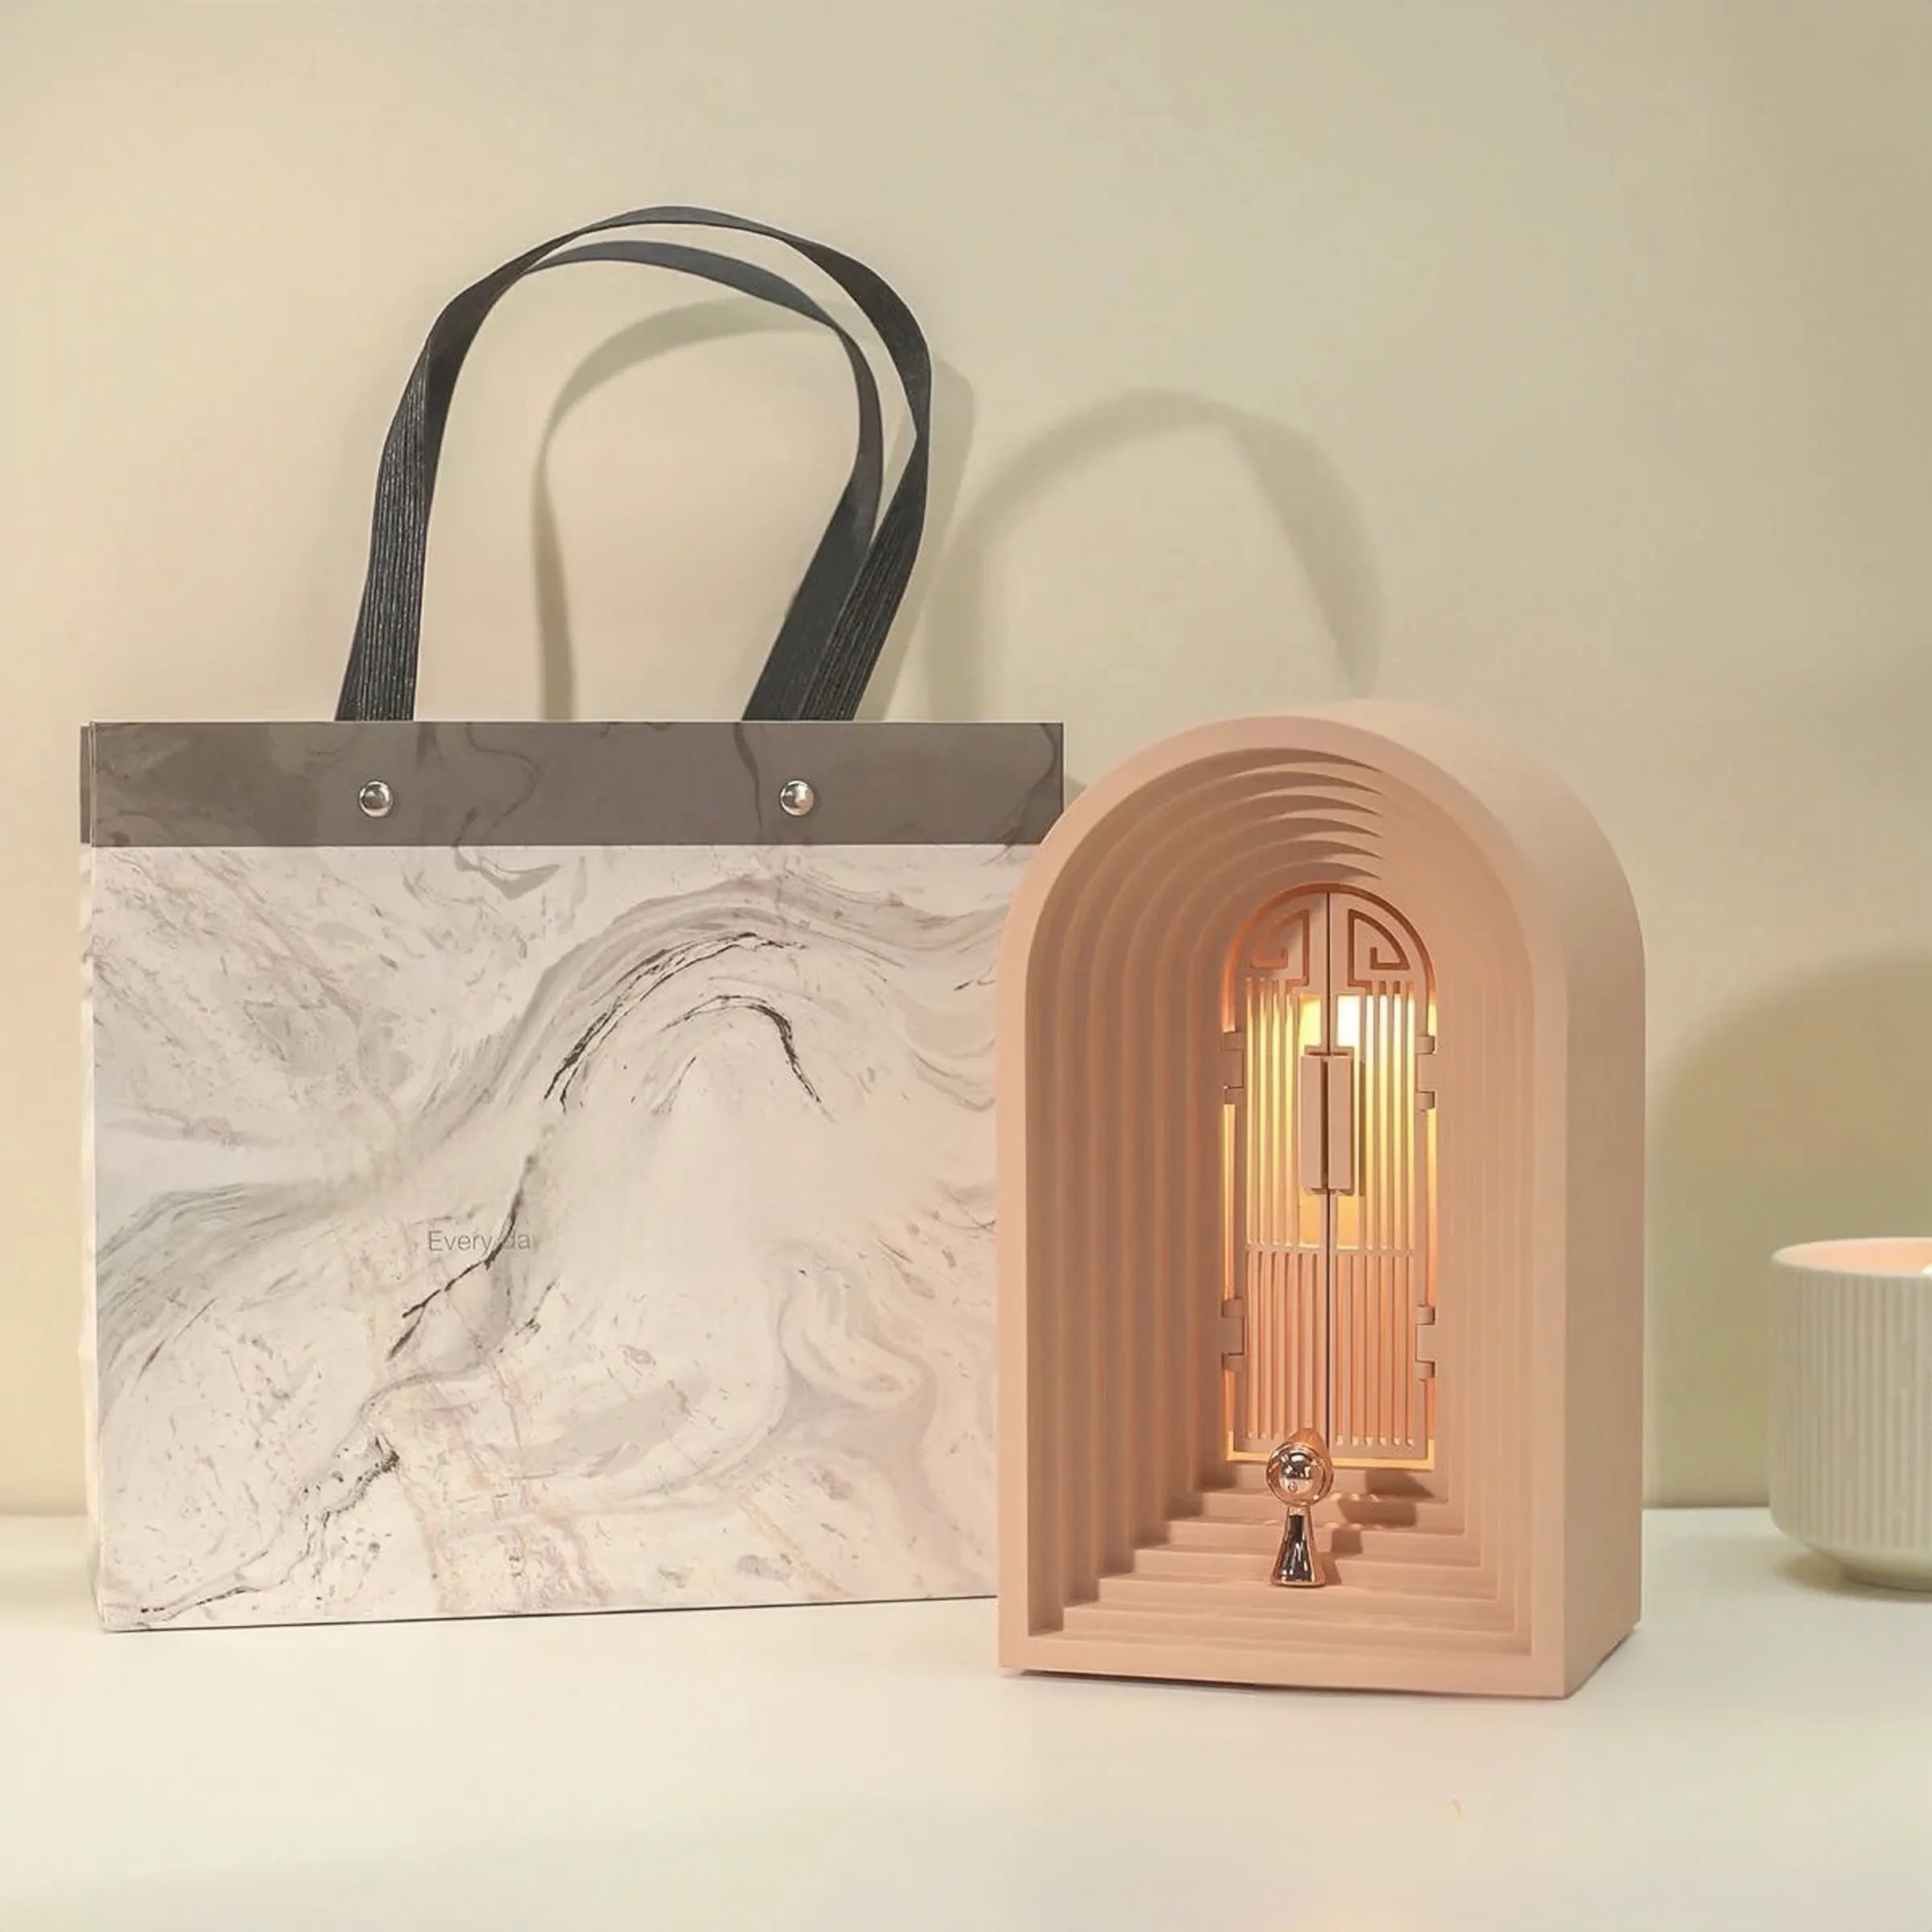 Arch Shape Table Lamp | Ambient Light | Stylish Sculpture Target Lamp